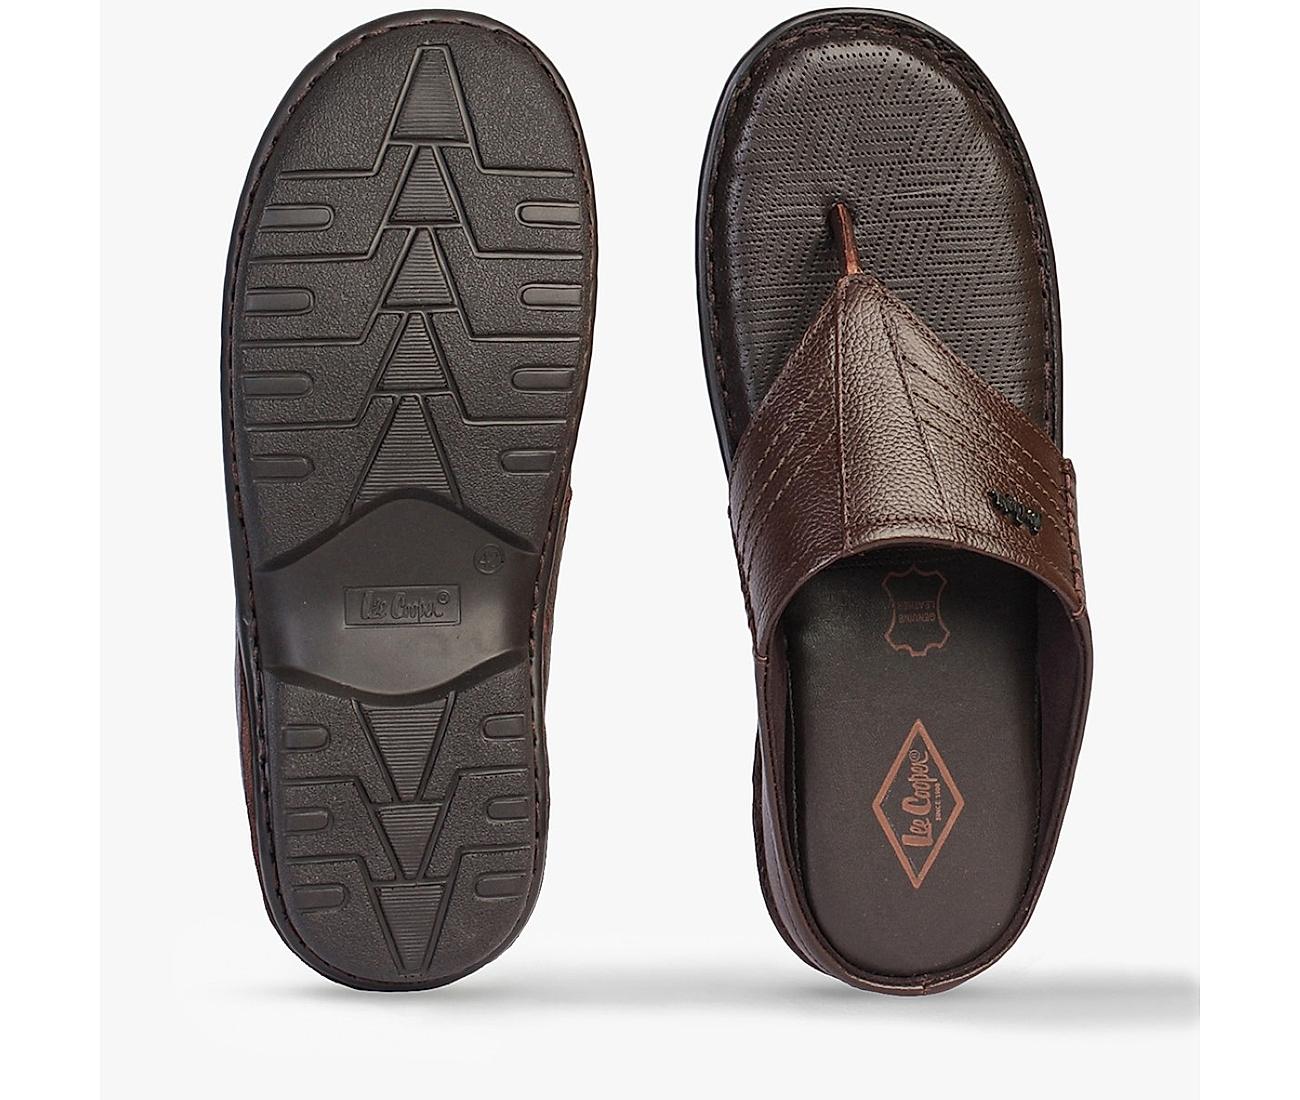 Lee Cooper Men Tan Leather Outdoor Sandals-10 UK (44 EU) (11 US) (LC3117C)  : Amazon.in: Fashion